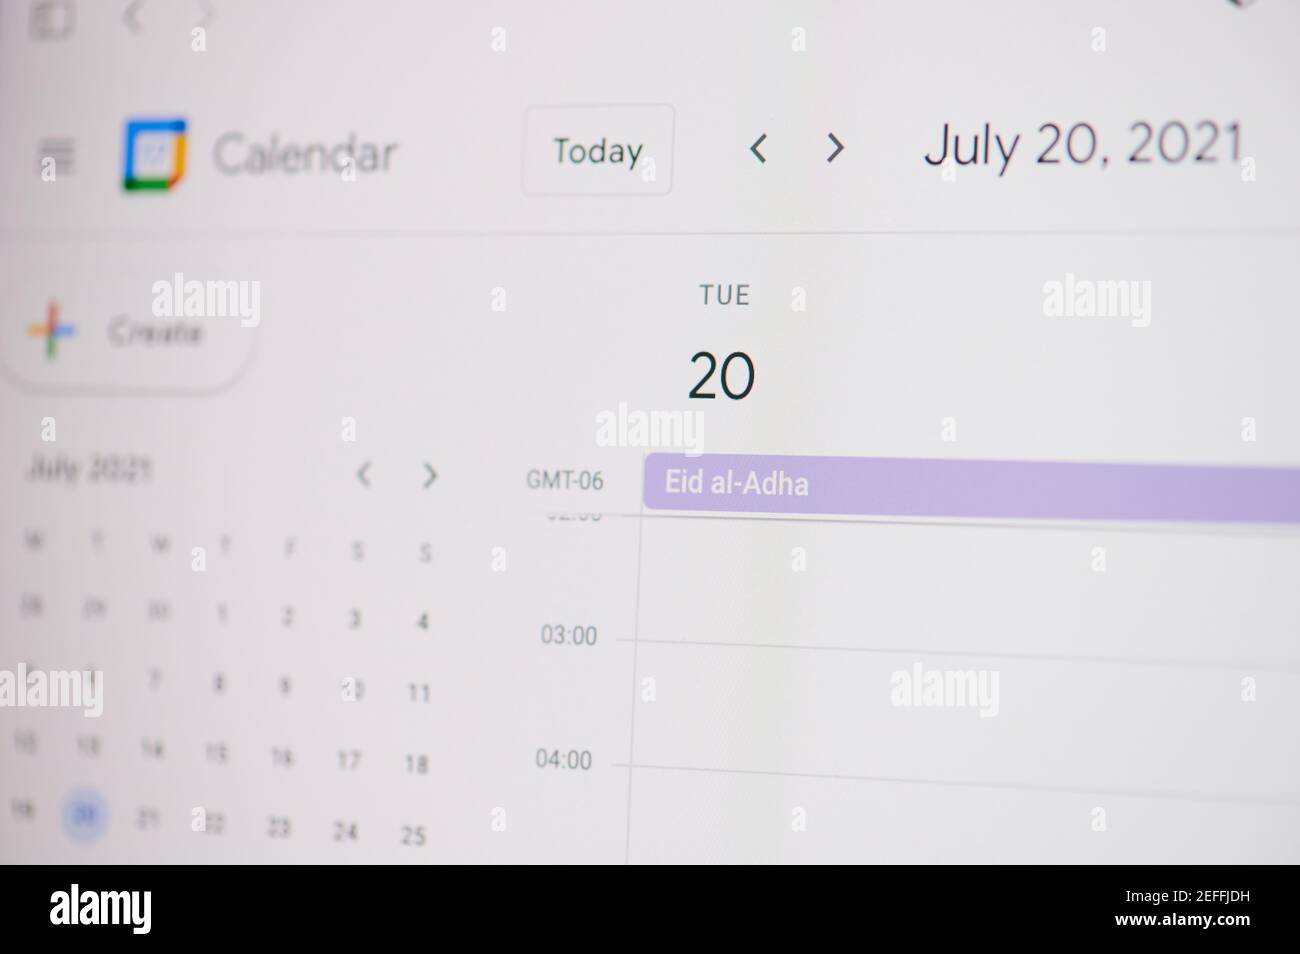 New york, USA - February 17, 2021: Eid al Adha 20 of July on google calendar on laptop screen close up view. Stock Photo